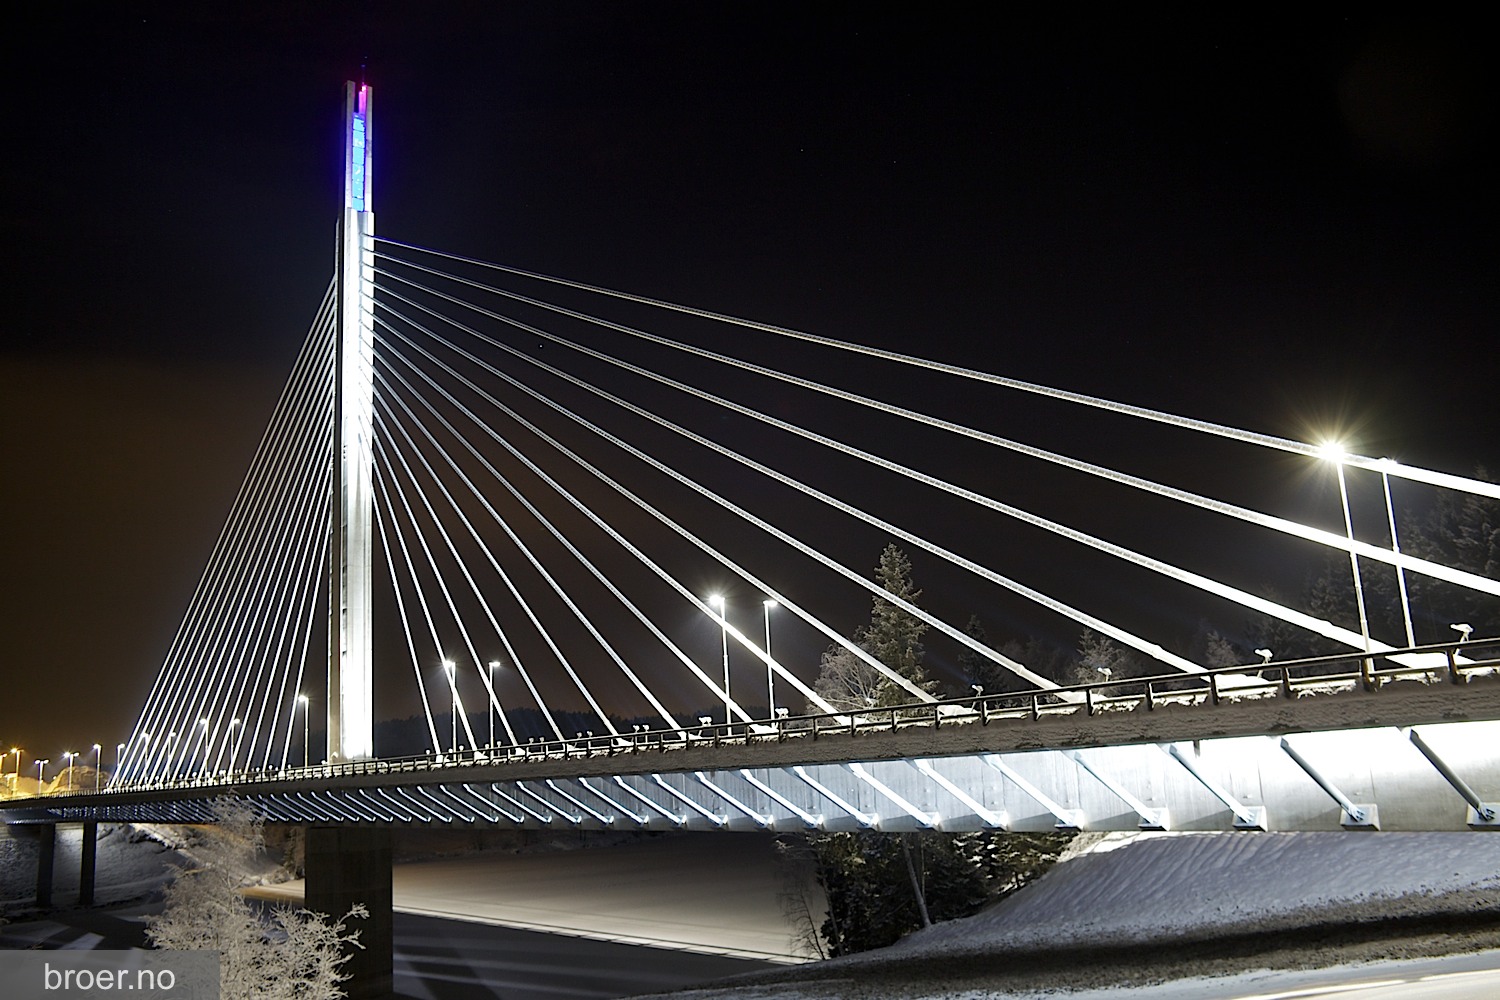 picture of Smaalenene bridge